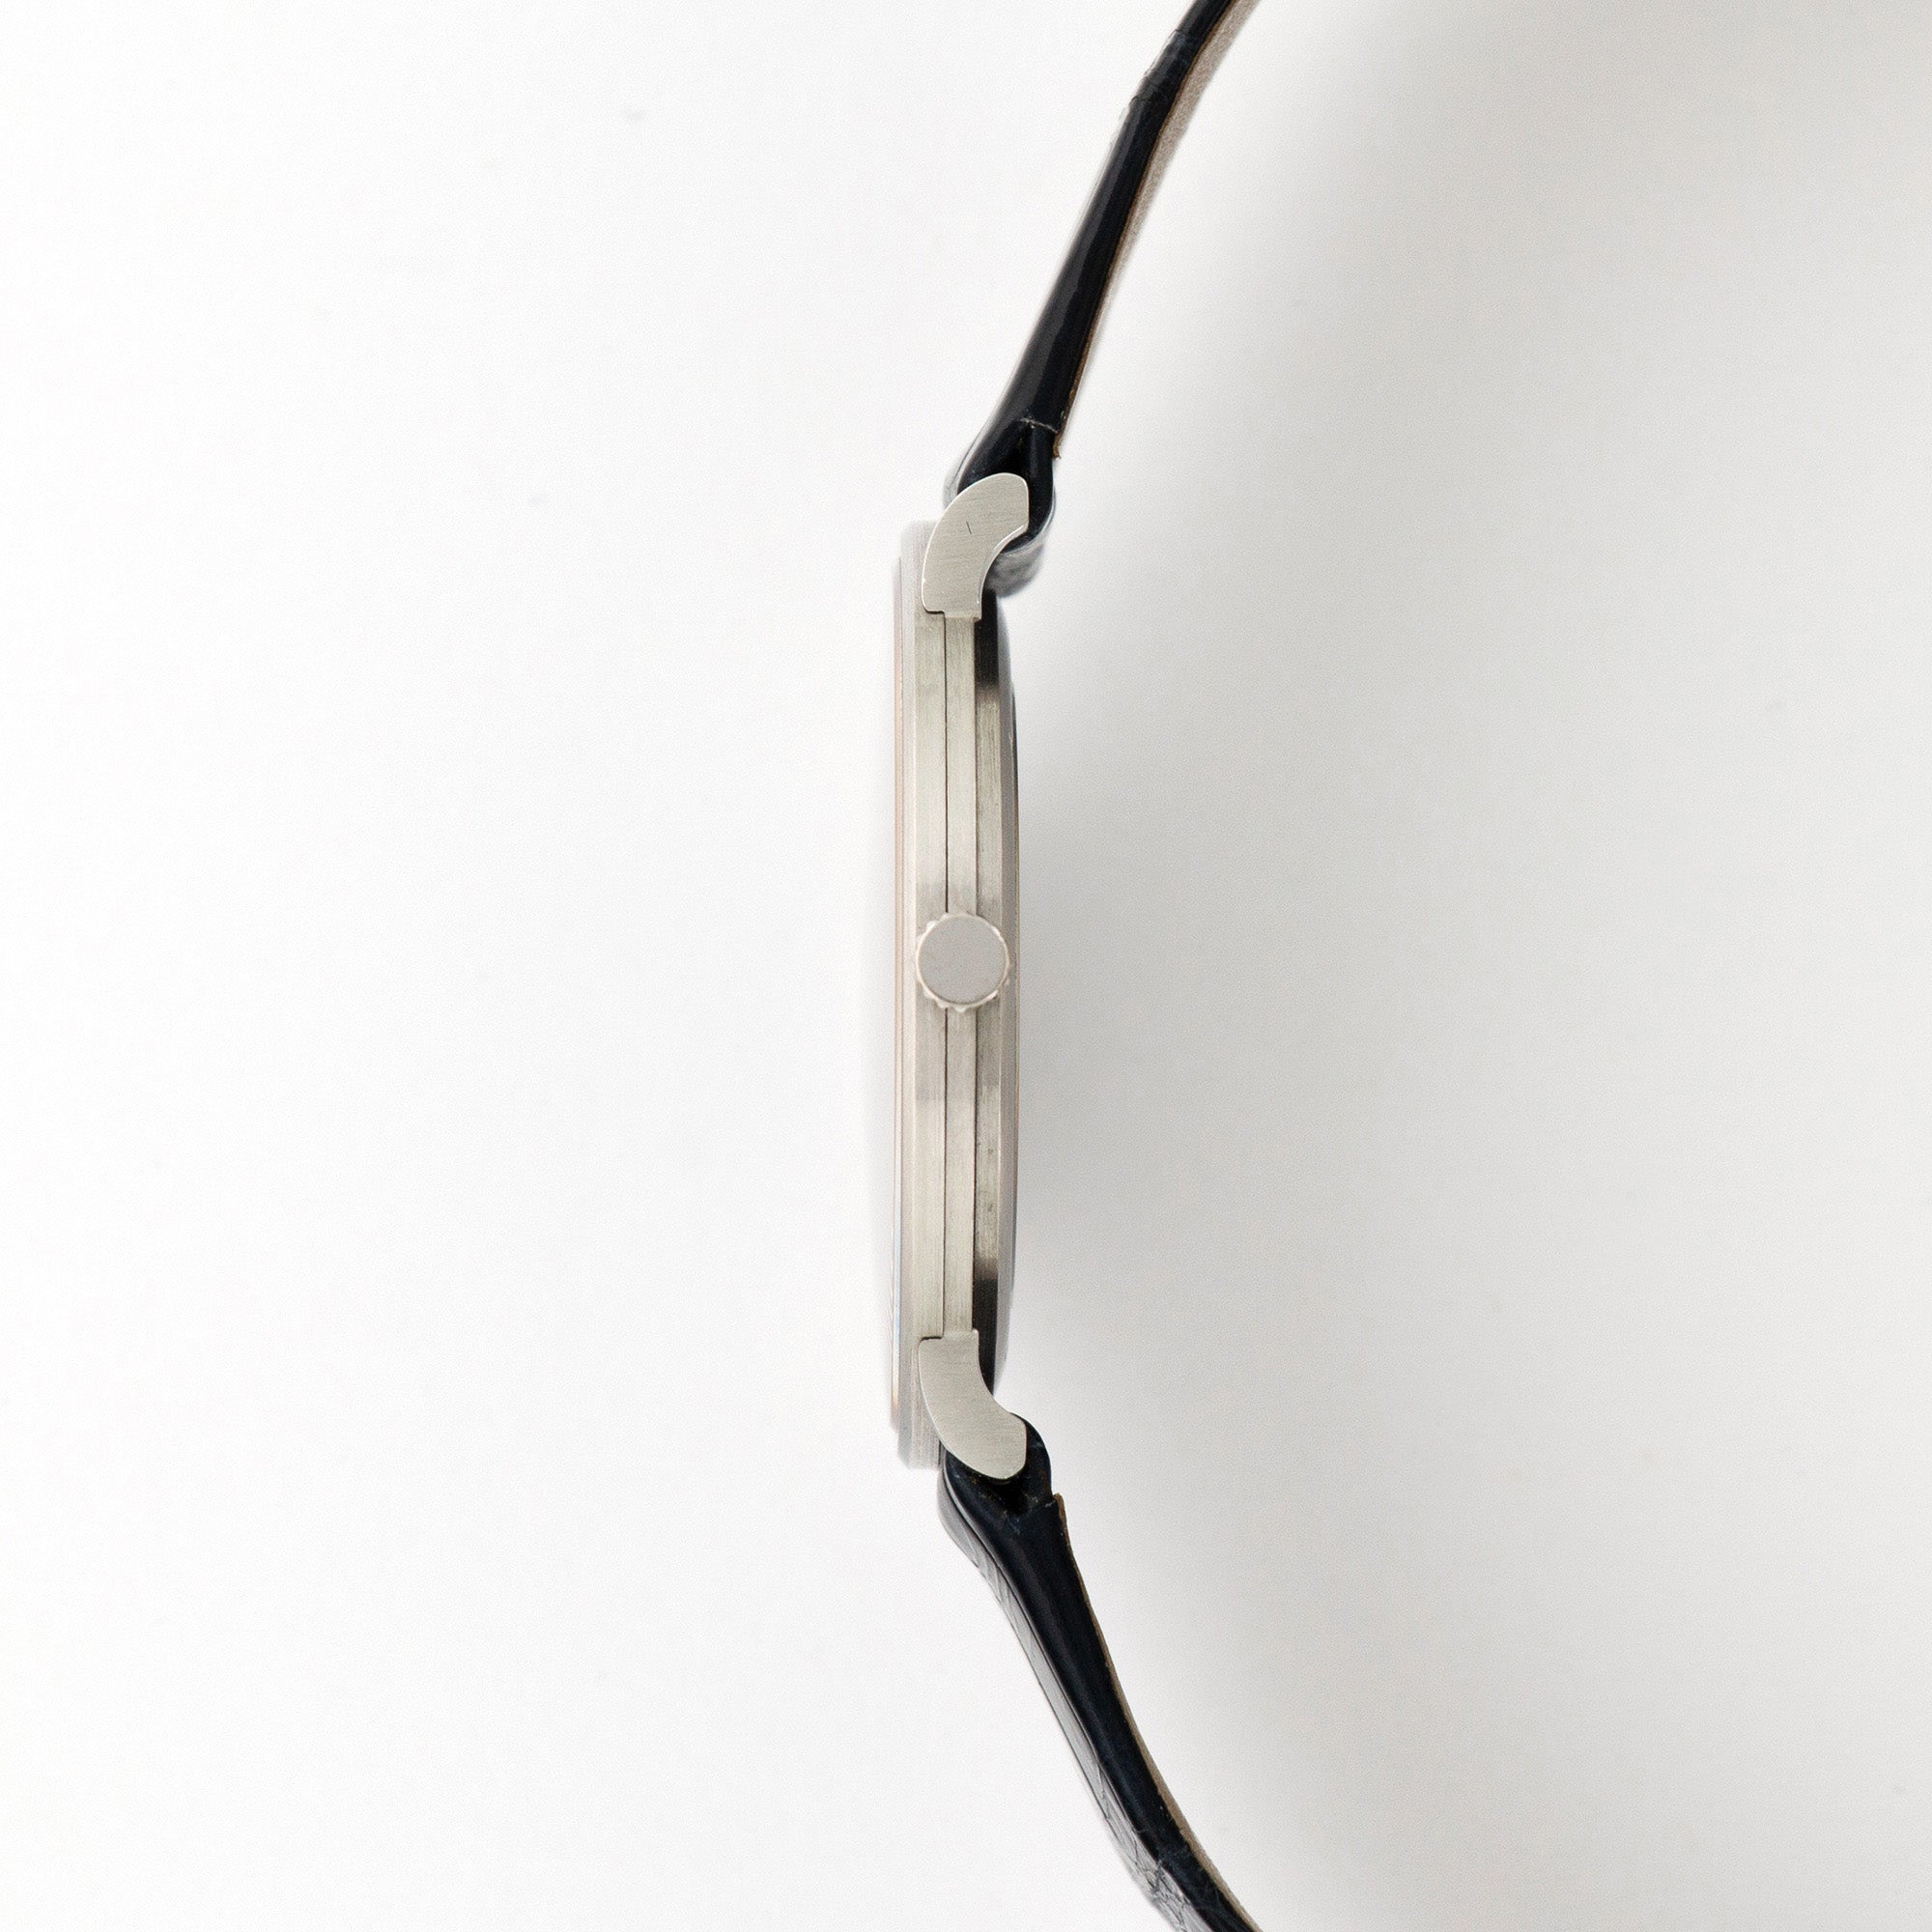 Audemars Piguet - Audemars Piguet Platinum Anniversary Edition Ultra-Thin Strap Watch - The Keystone Watches